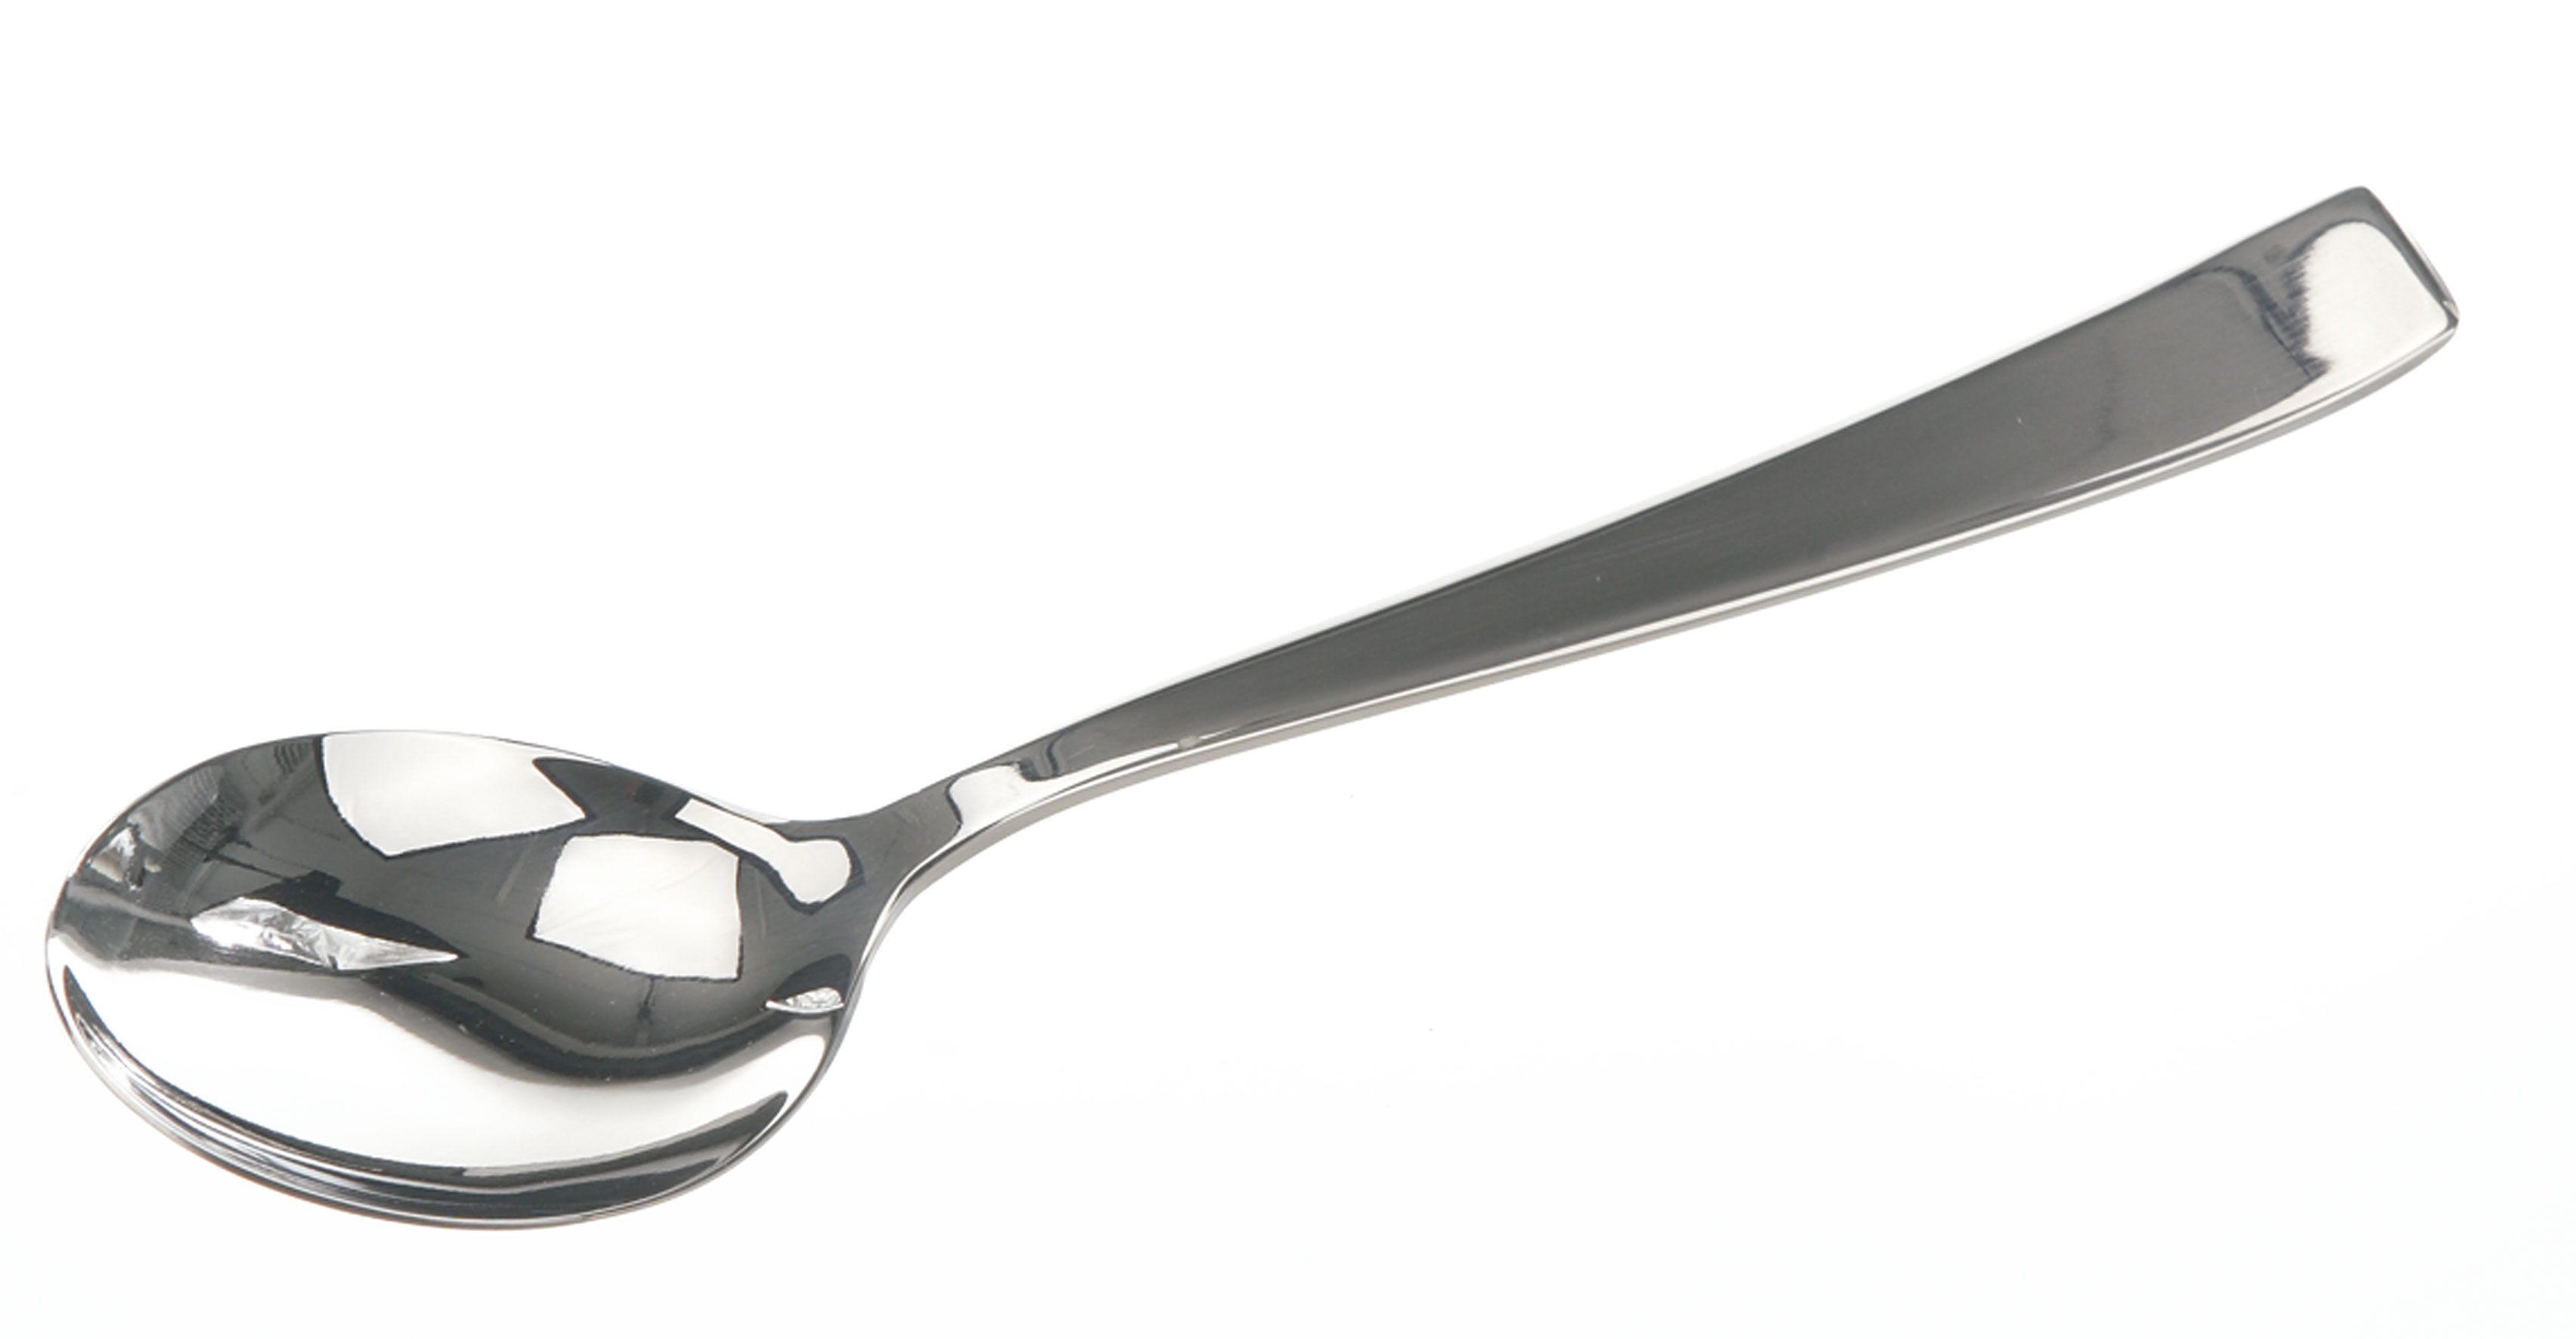 Laboratory spoon. Length (mm): 135. Spatula (mm): 31x45